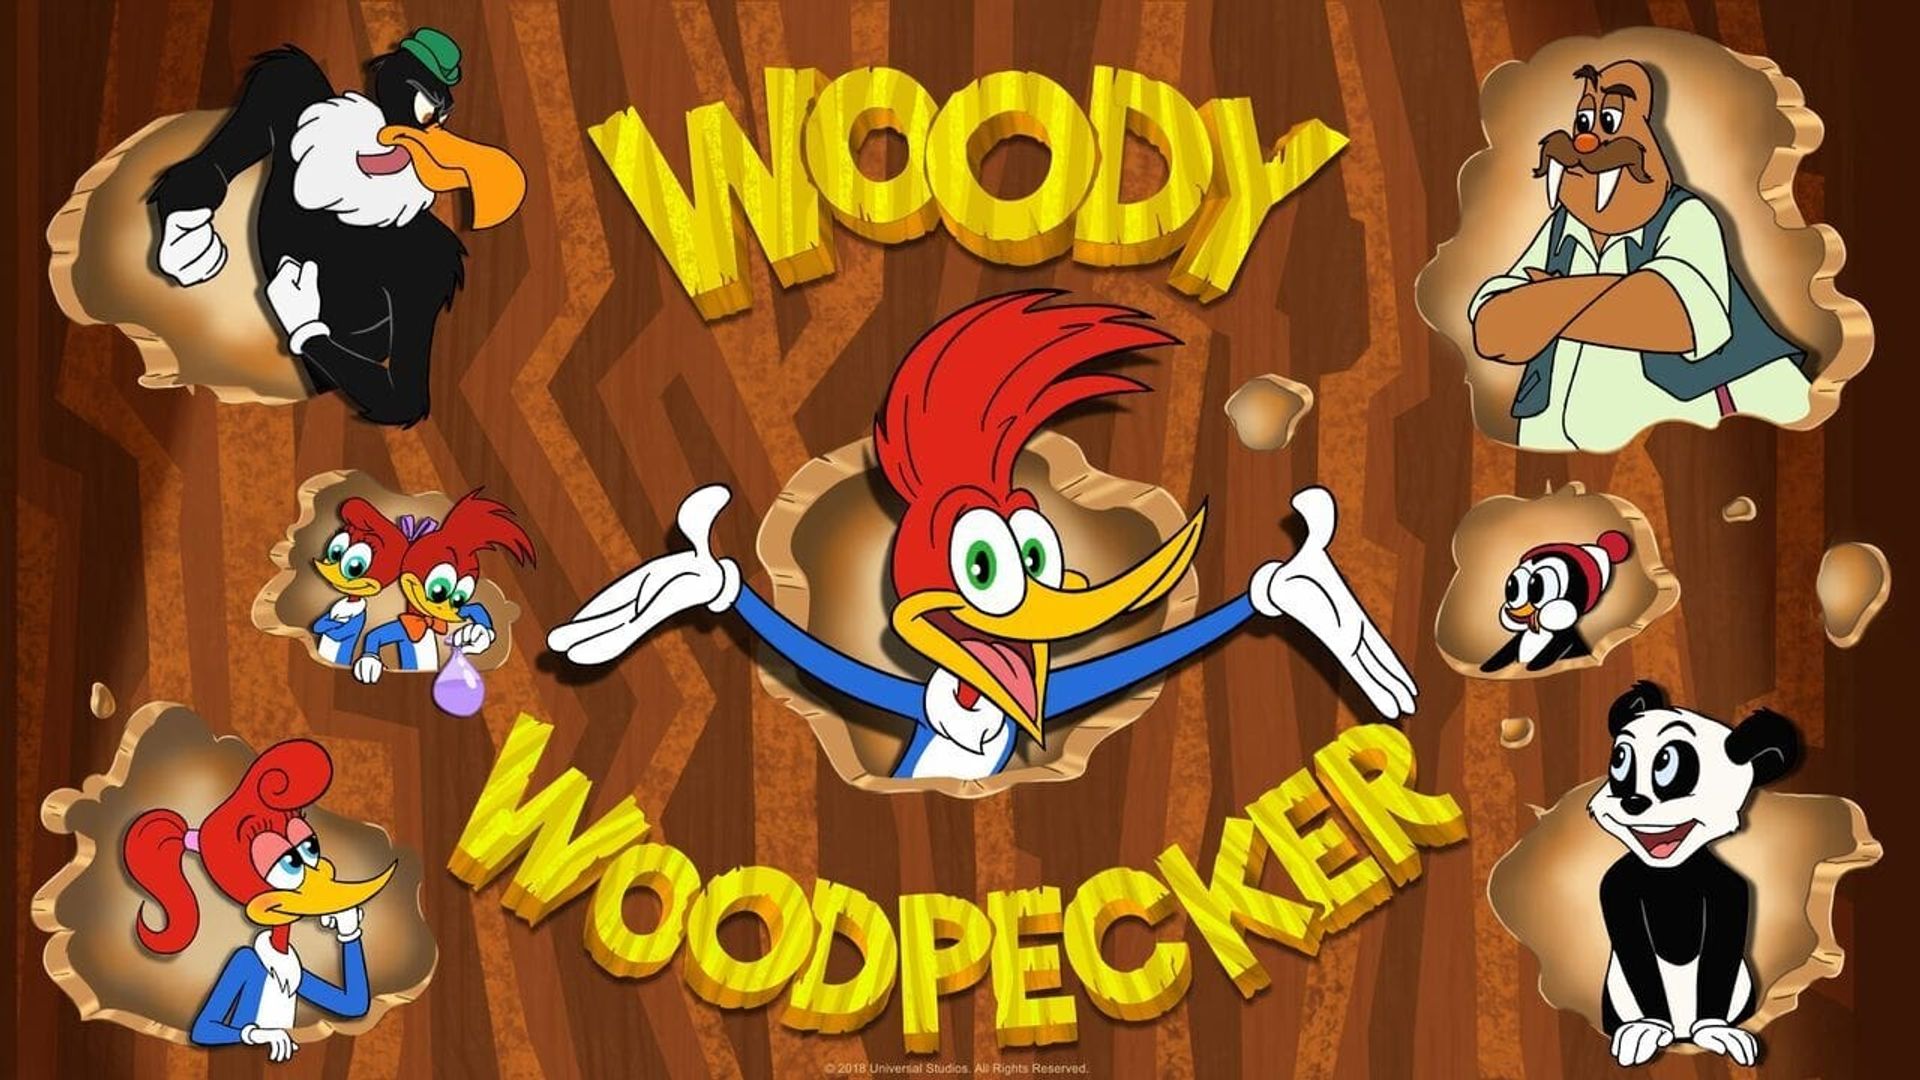 Woody Woodpecker background